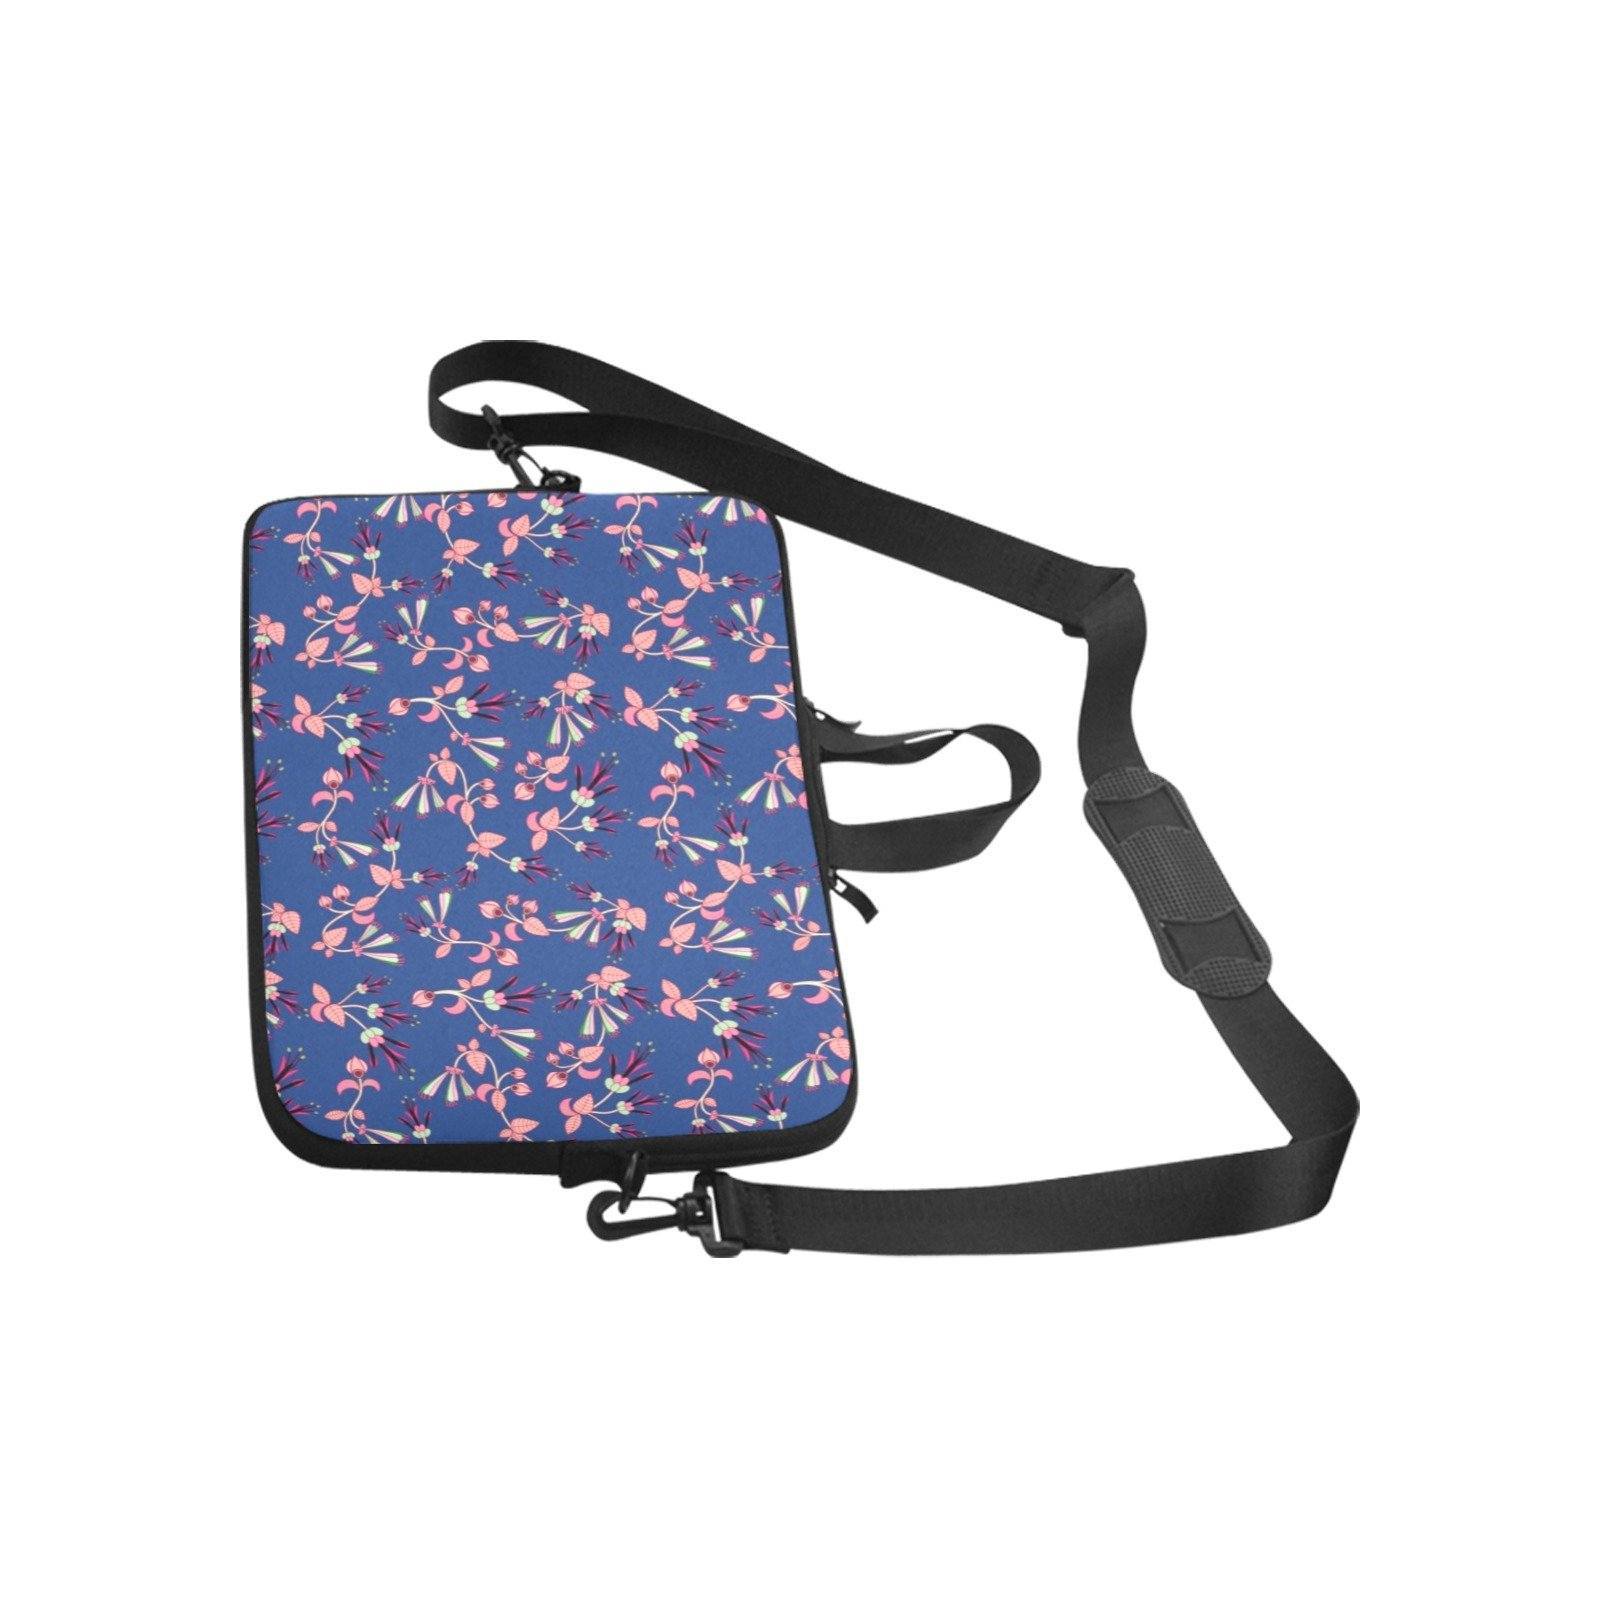 Swift Floral Peach Blue Laptop Handbags 14" bag e-joyer 